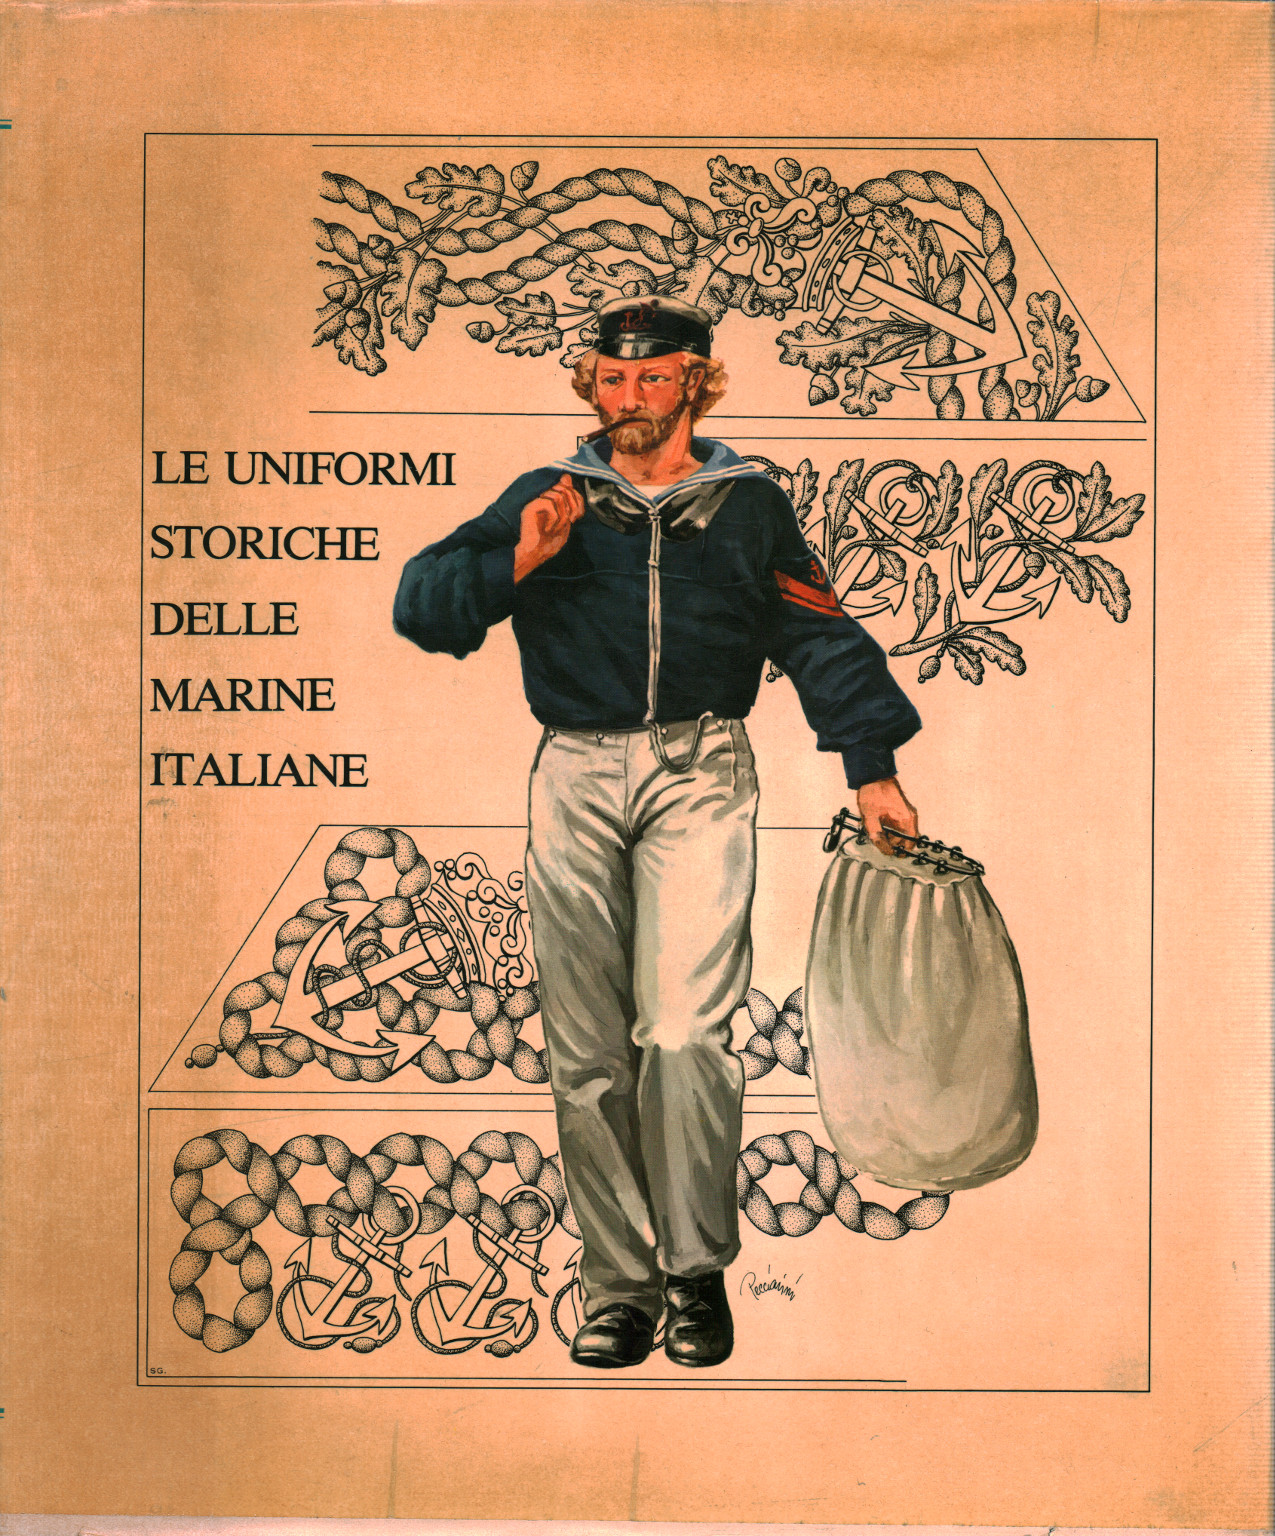 The historic Uniforms of the Italian Marine, s.a.